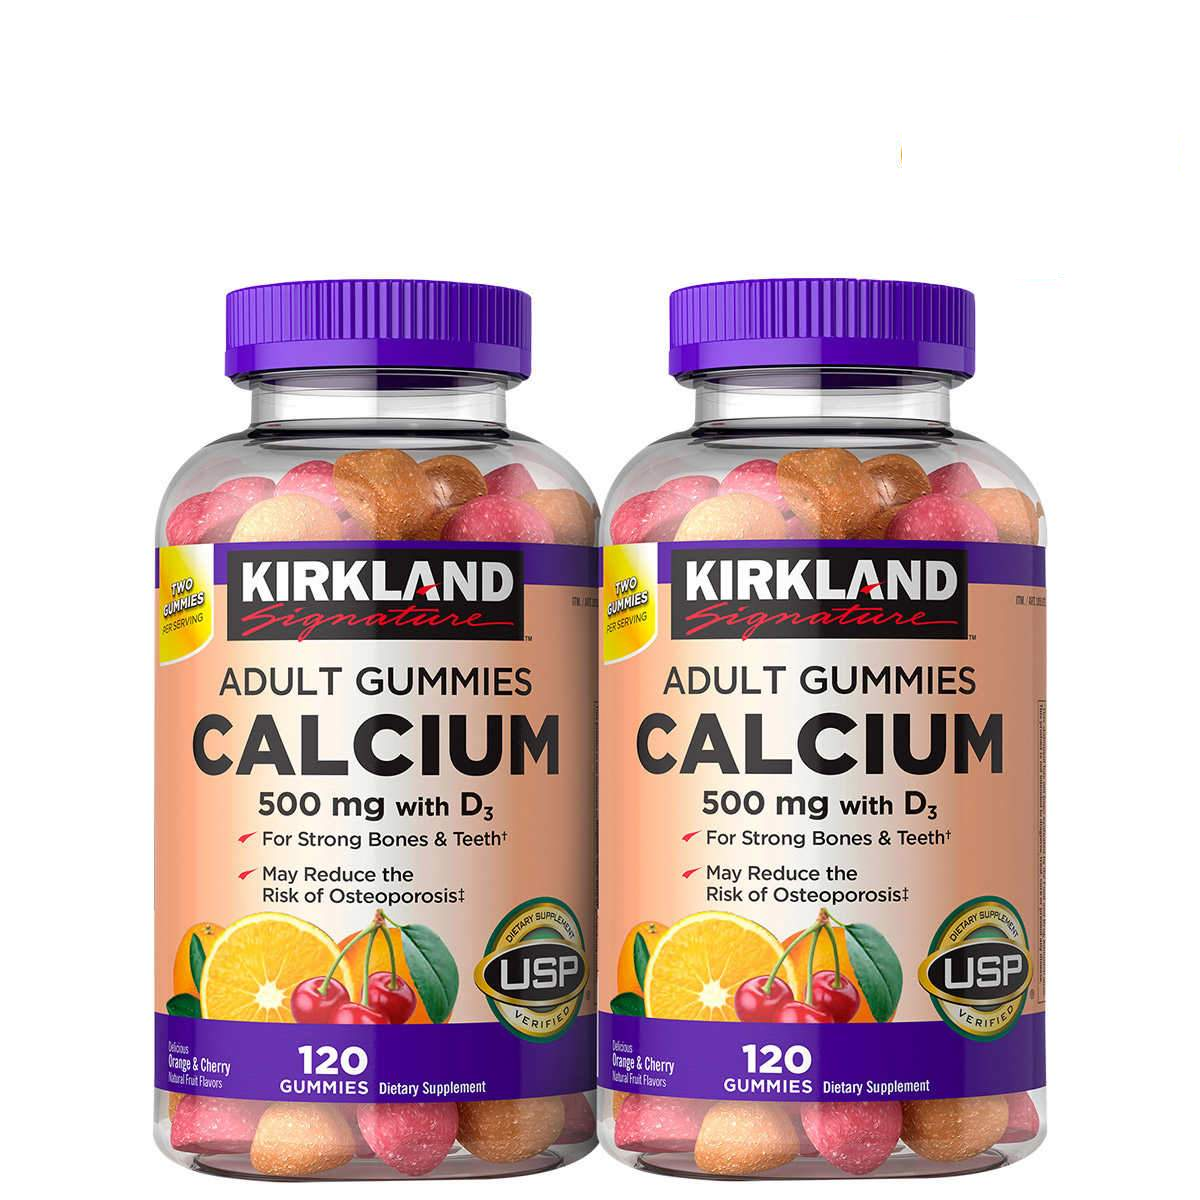 Kirkland Signature Calcium 500 mg with D3, 240 Adult Gummies